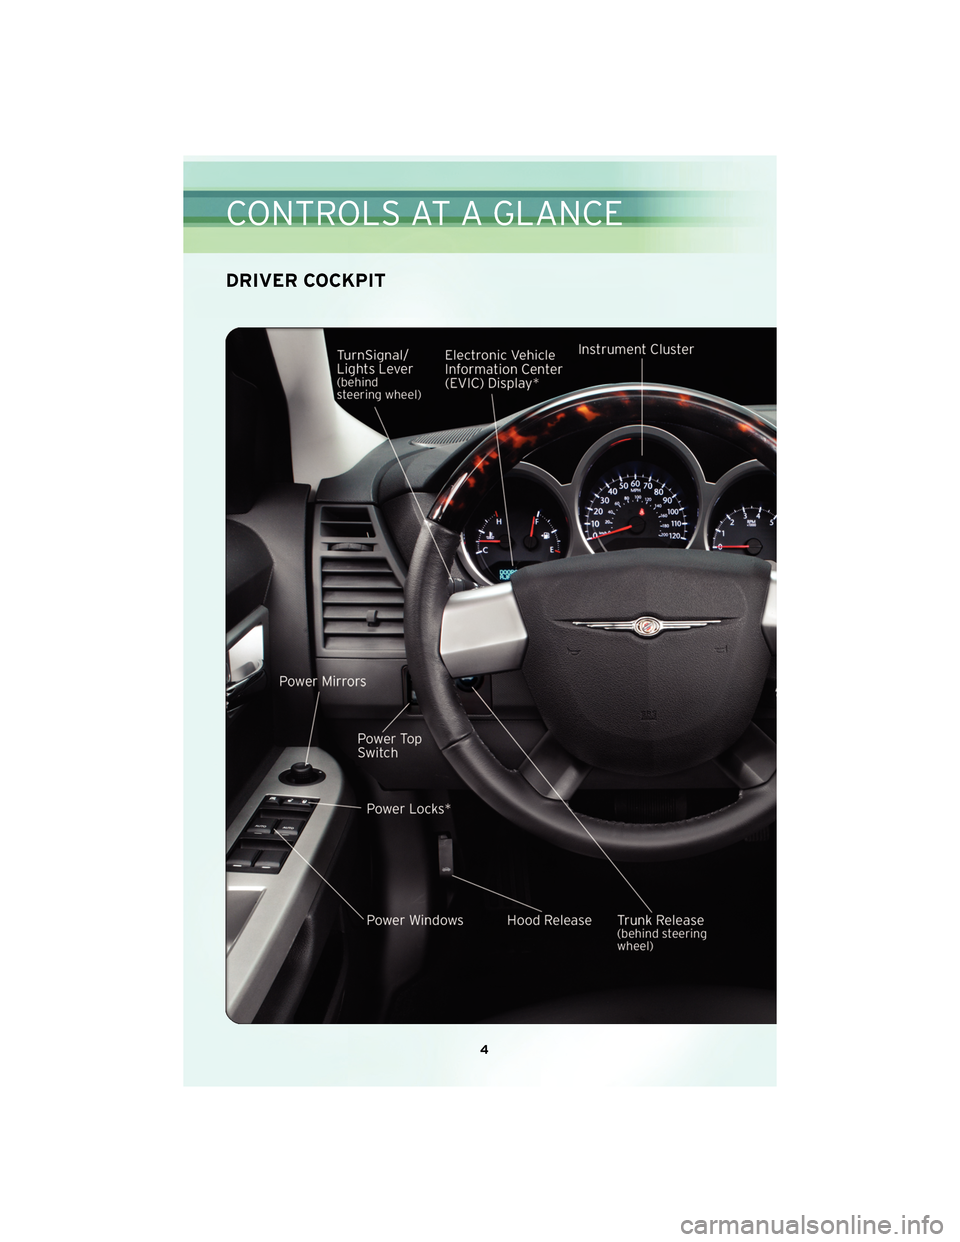 CHRYSLER SEBRING CONVERTIBLE 2010 3.G User Guide DRIVER COCKPIT
4
CONTROLS AT A GLANCE 